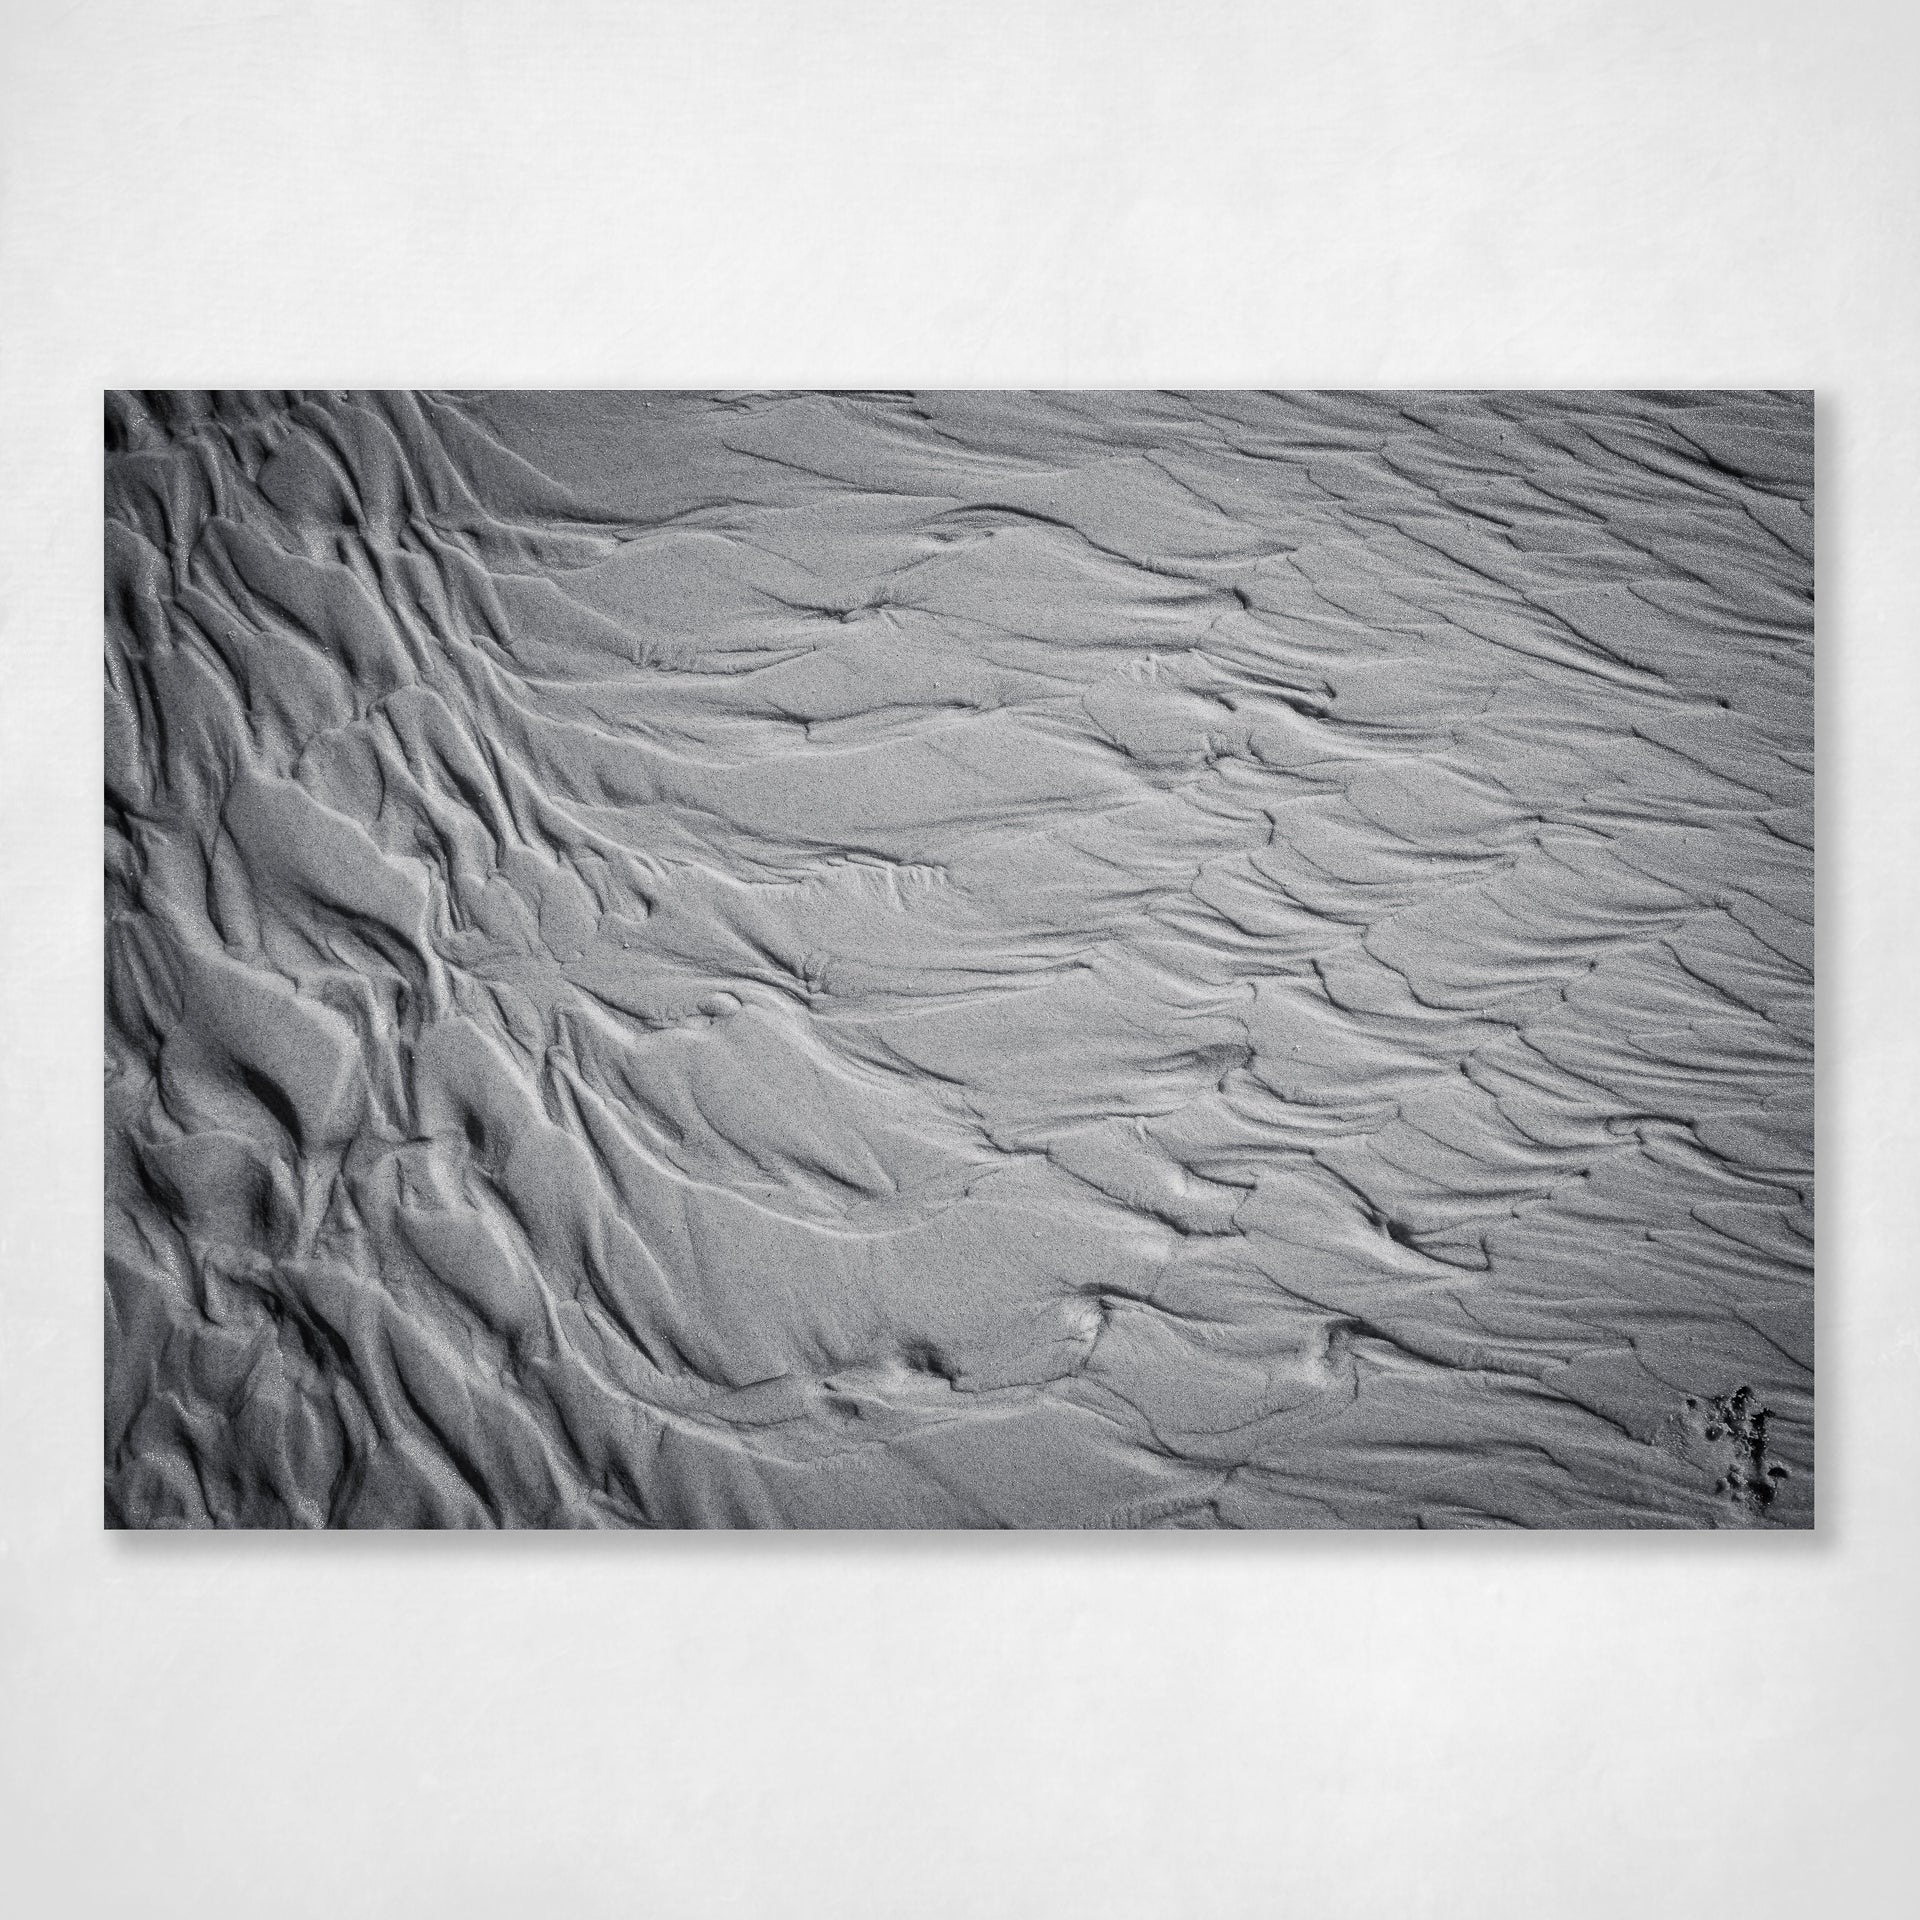 Abstract Black and White Coastal Wall Art Print Natural Patterns - Evidence